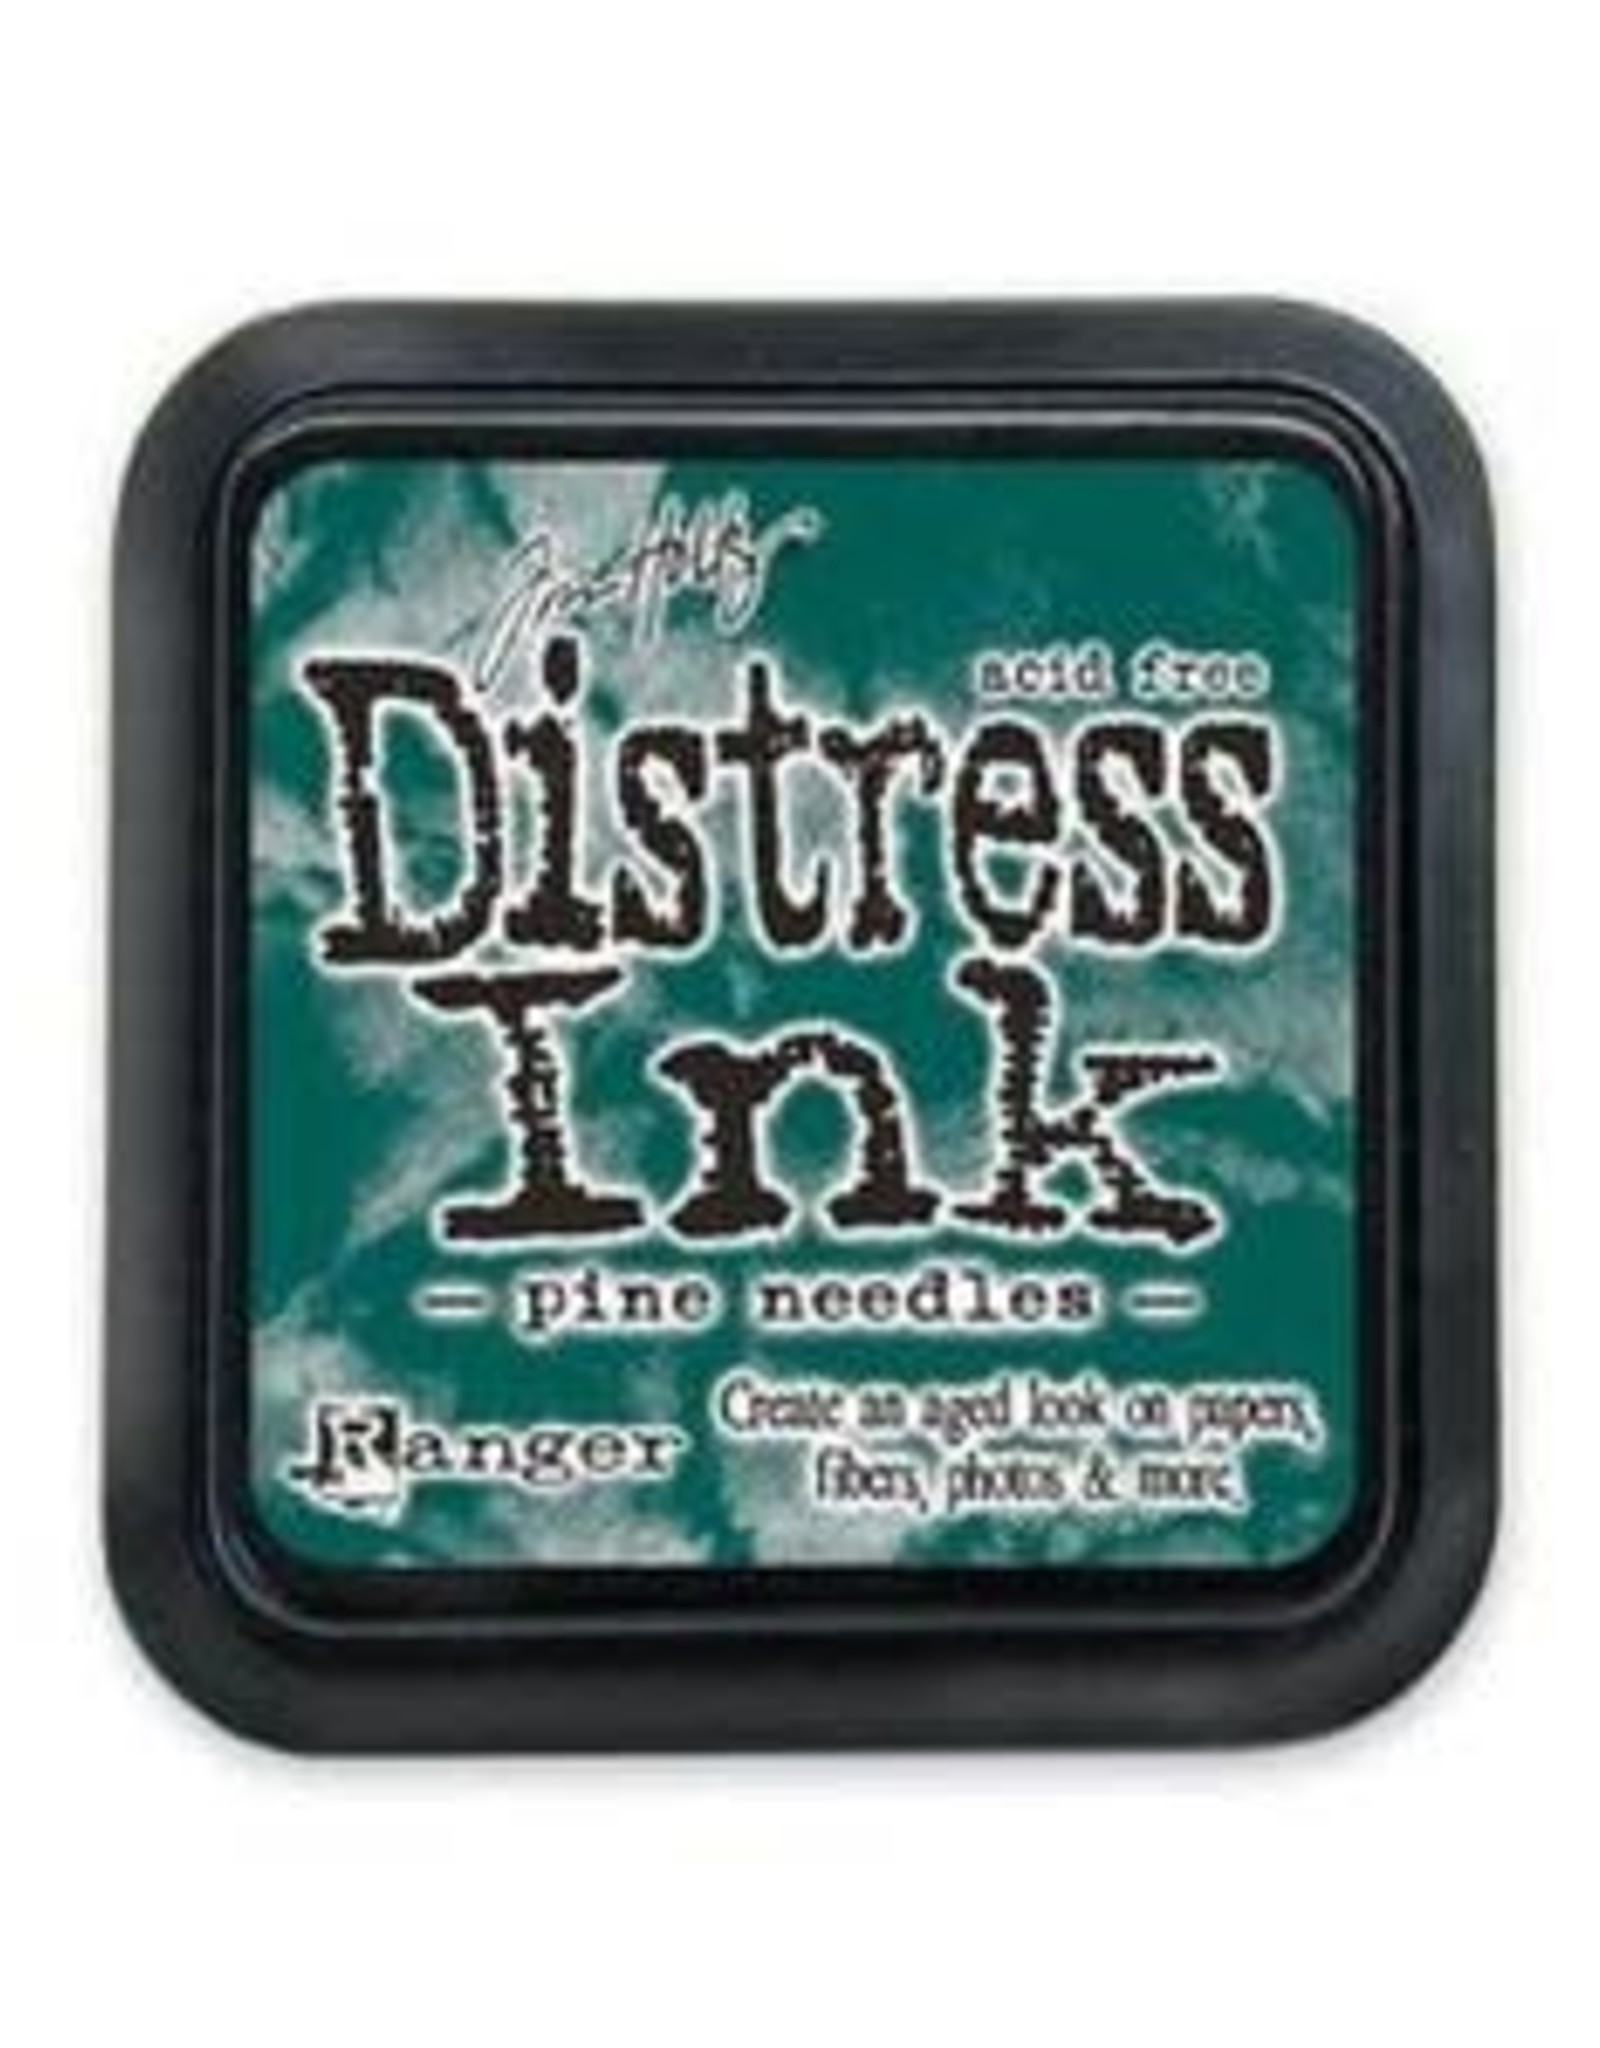 Tim Holtz - Ranger Distress Ink Pine Needles